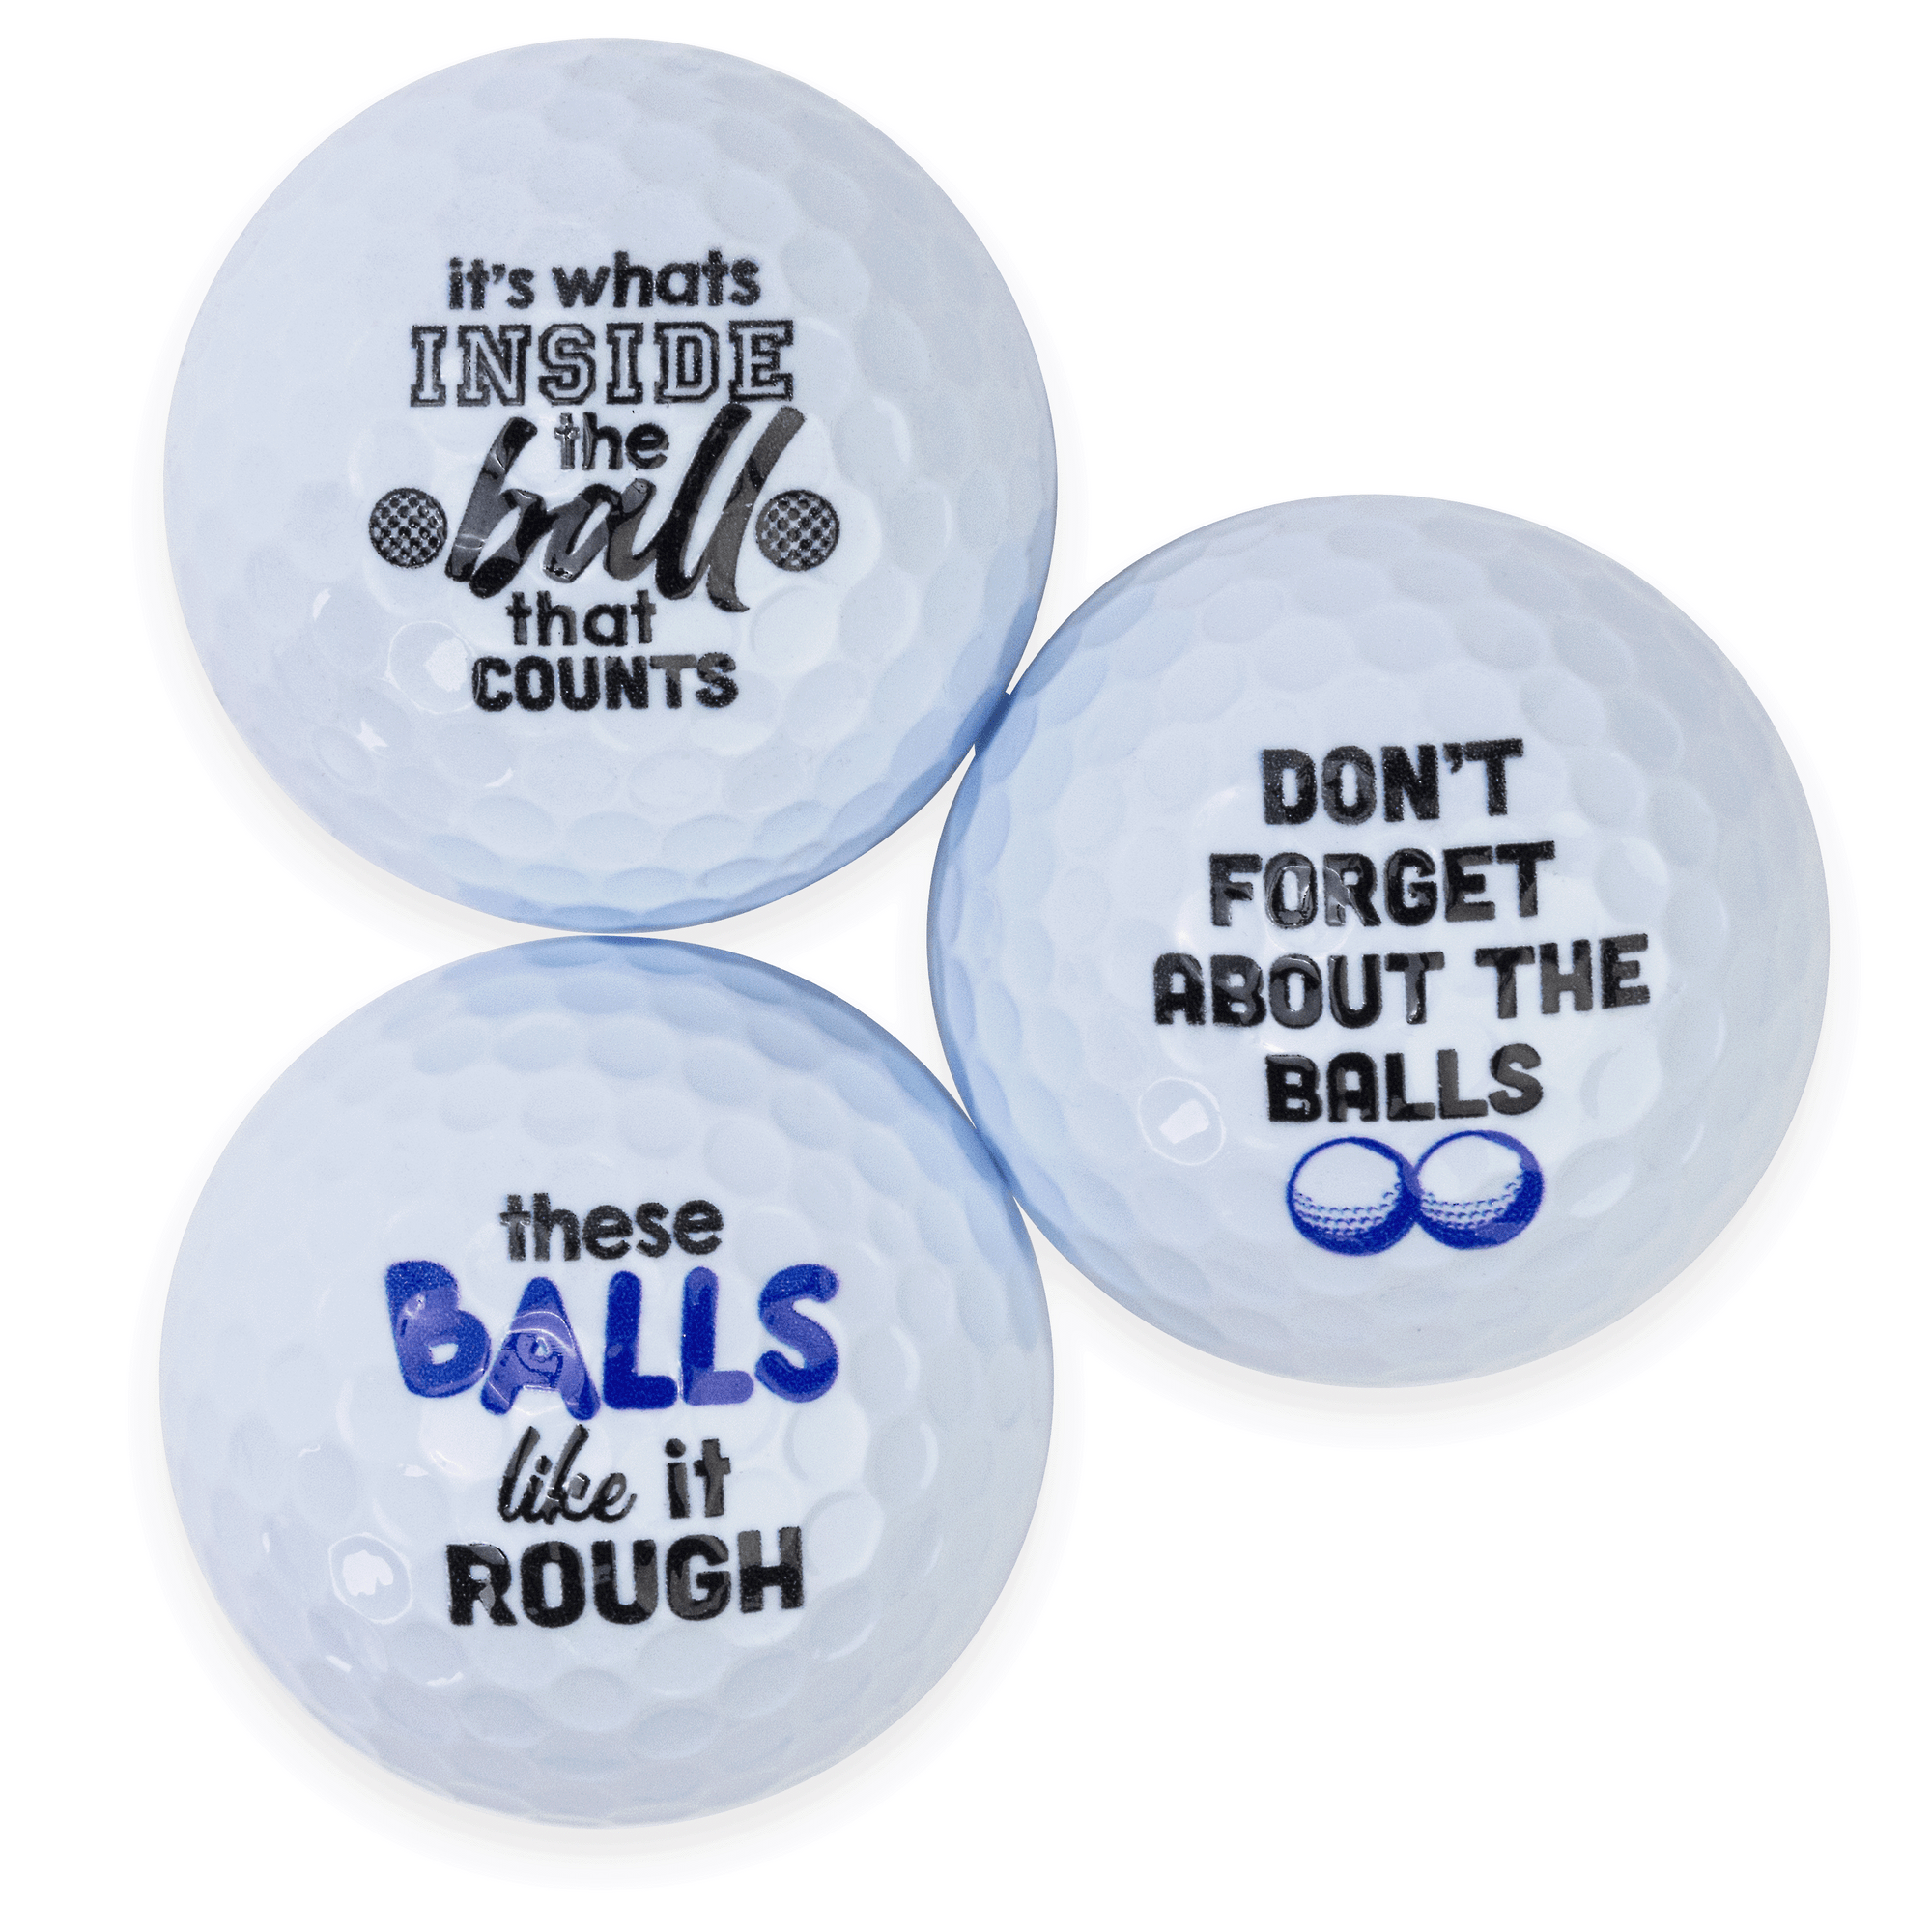 Naughty Balls, Golf Jokes Printed on Golf Balls, Egg Carton Packaging